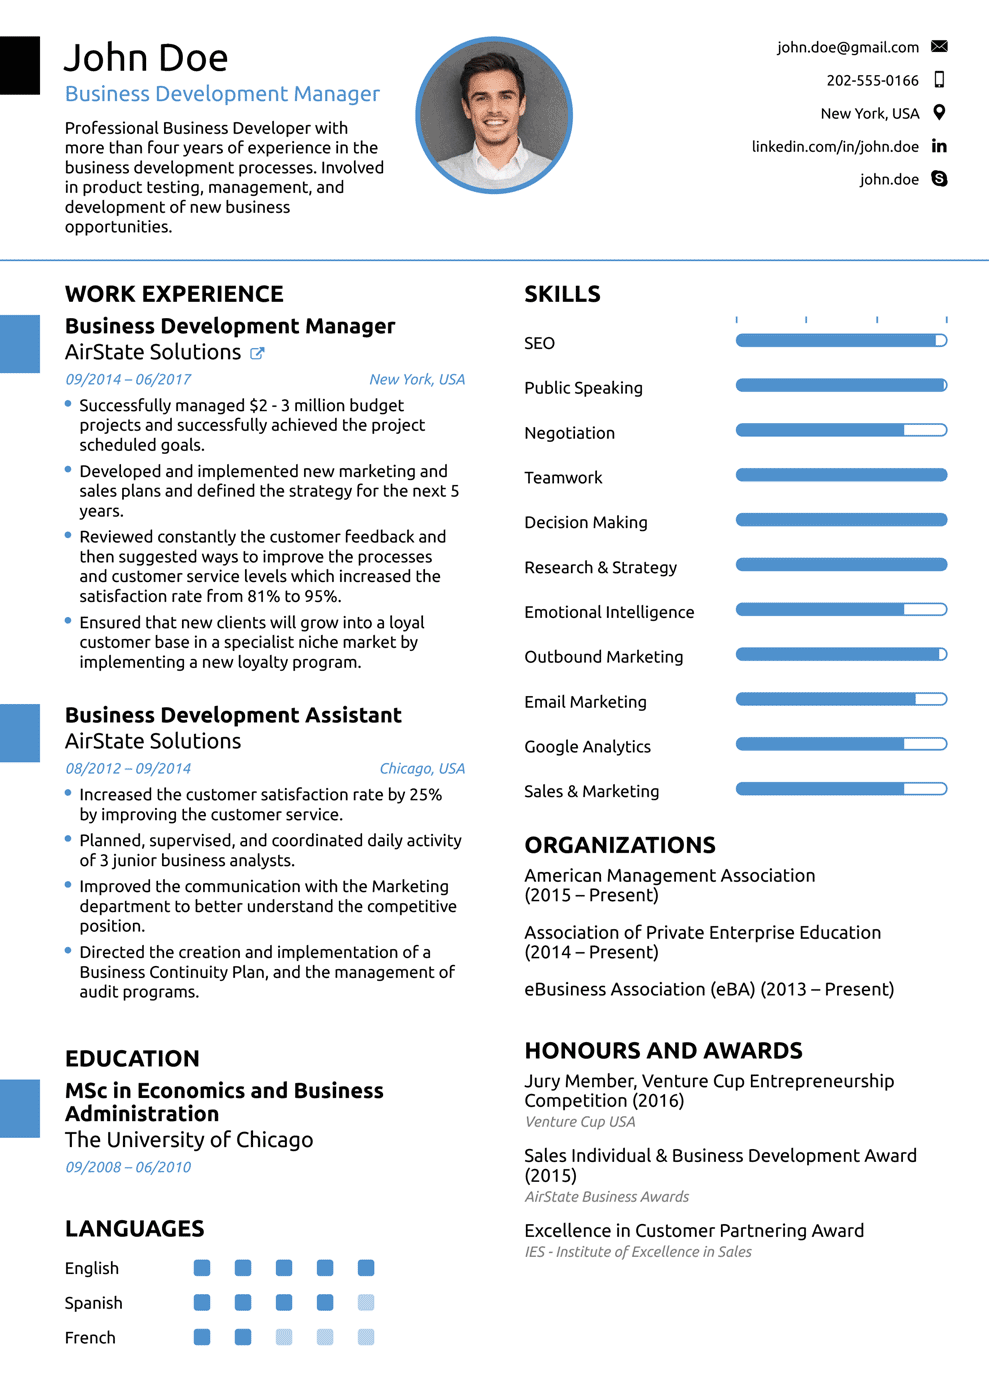 Professional Resume Examples Professional Resume Template professional resume examples|wikiresume.com